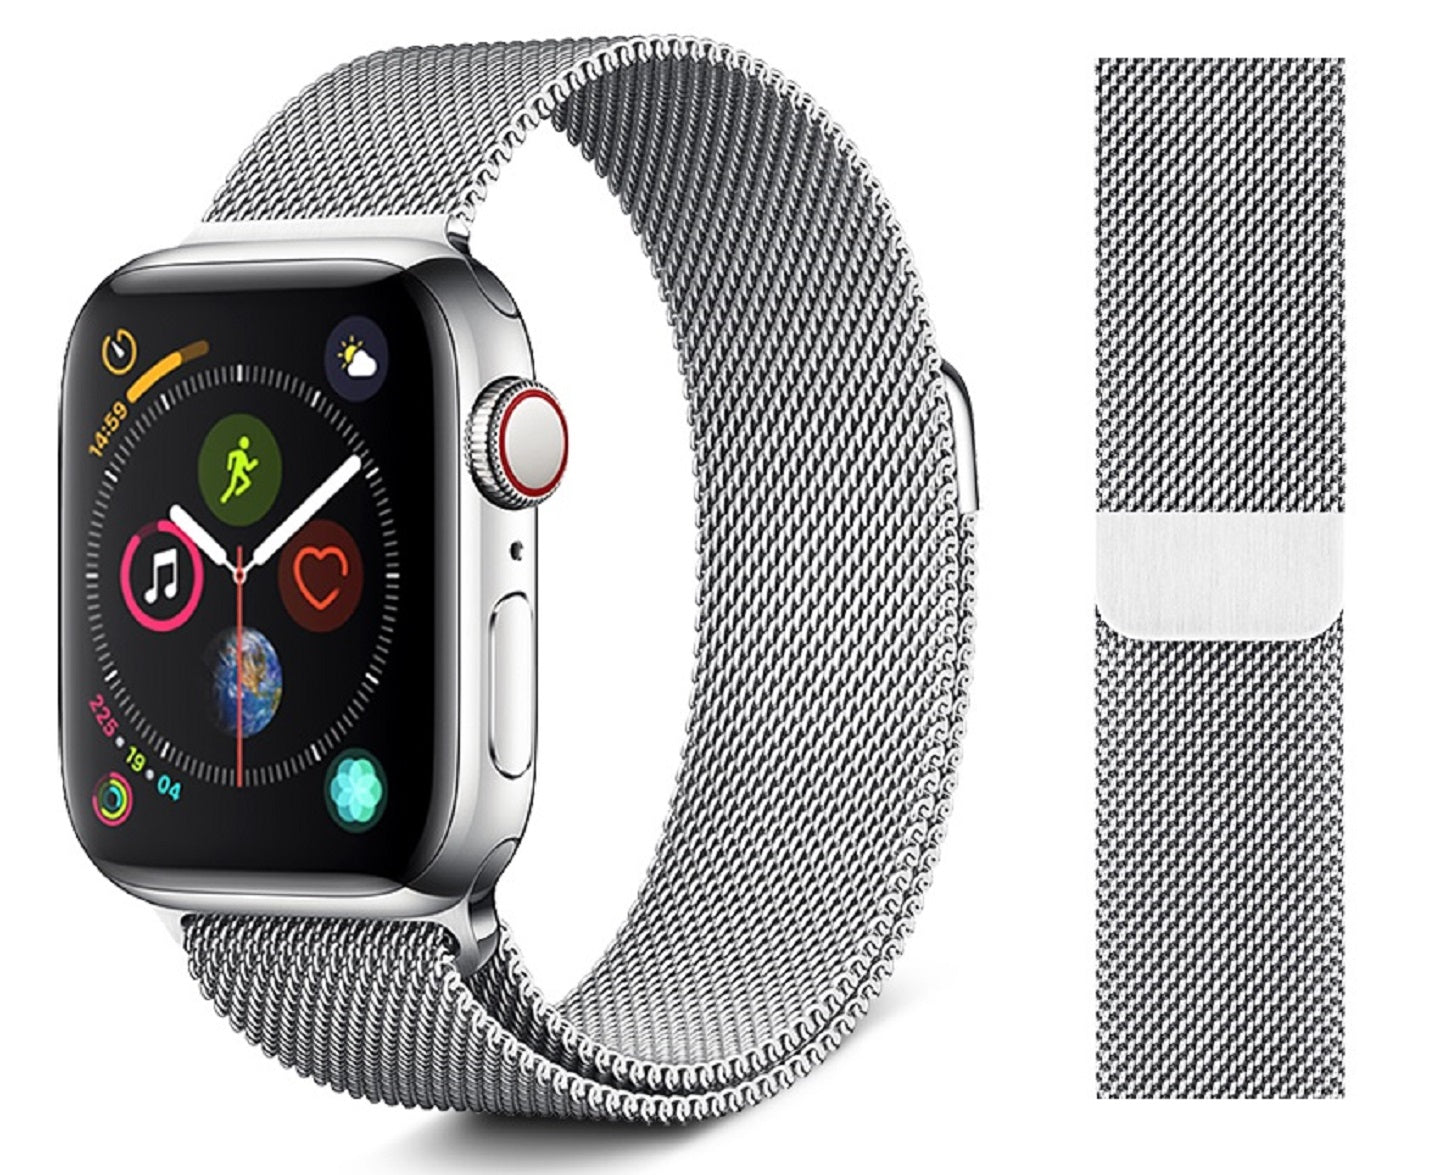 VPG 不銹鋼織網磁吸回環式Apple Watch 錶帶 全系列適用 (3色)